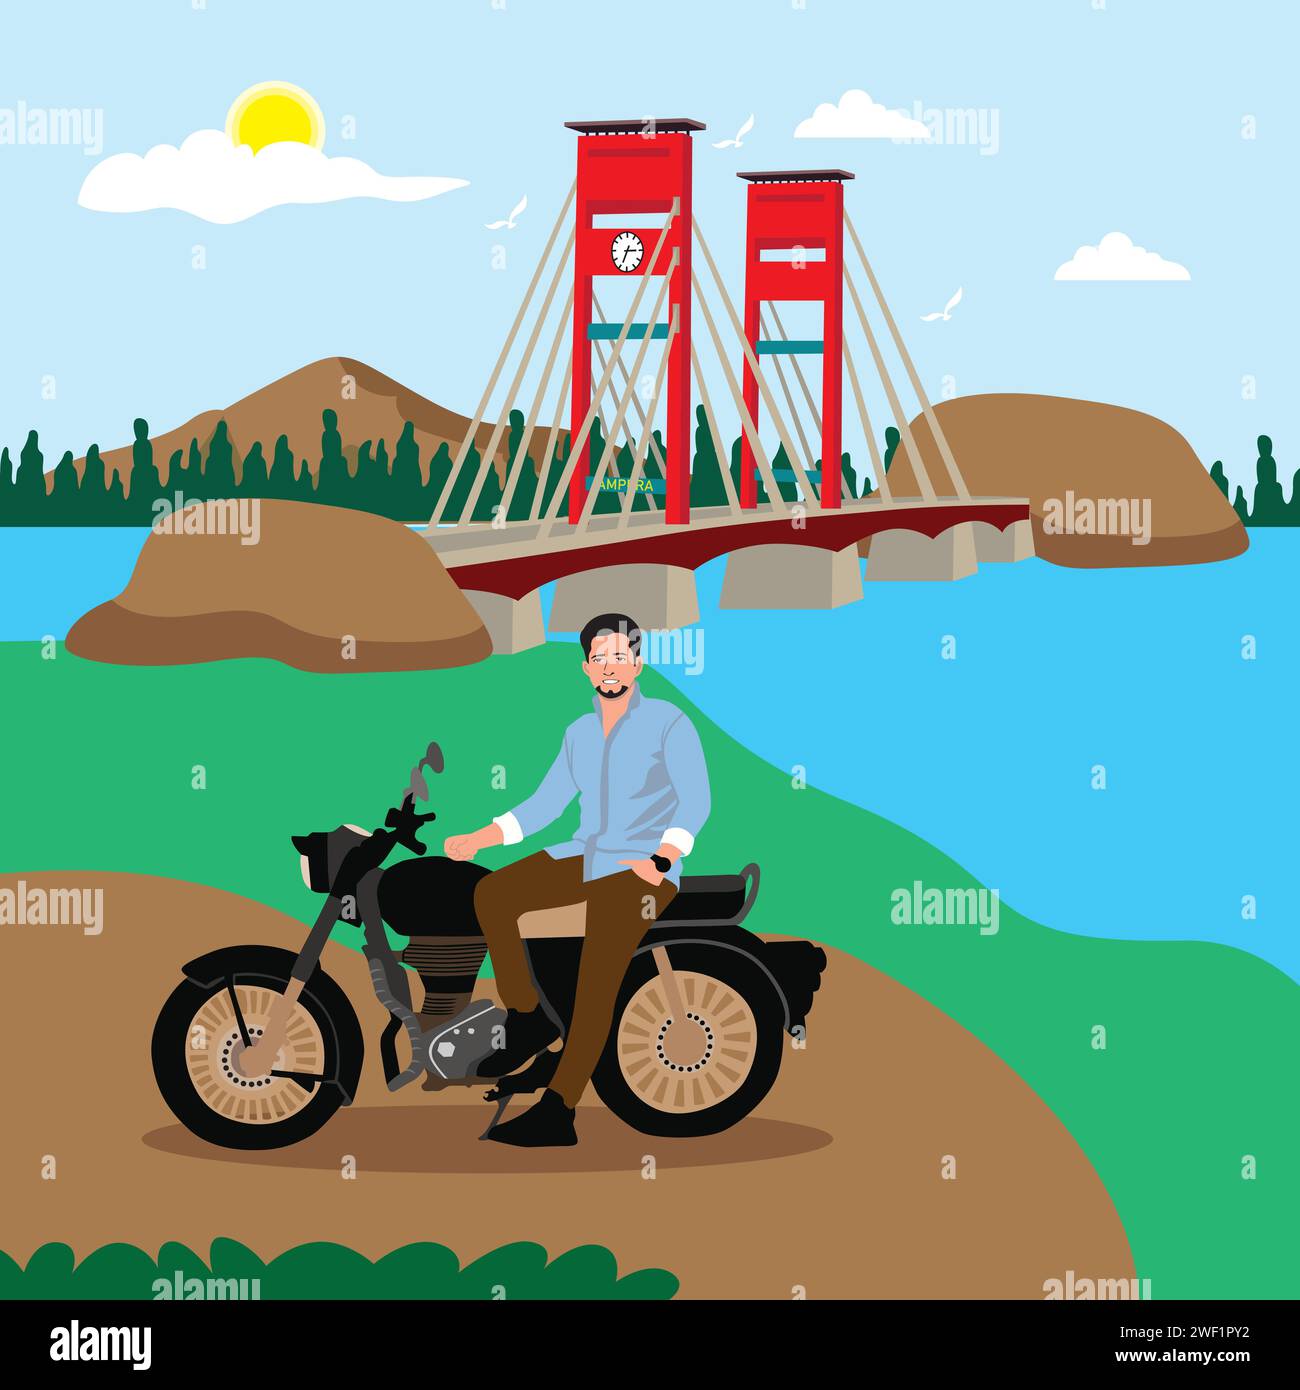 Biker on a motorbike. Vector illustration in flat style. Stock Vector